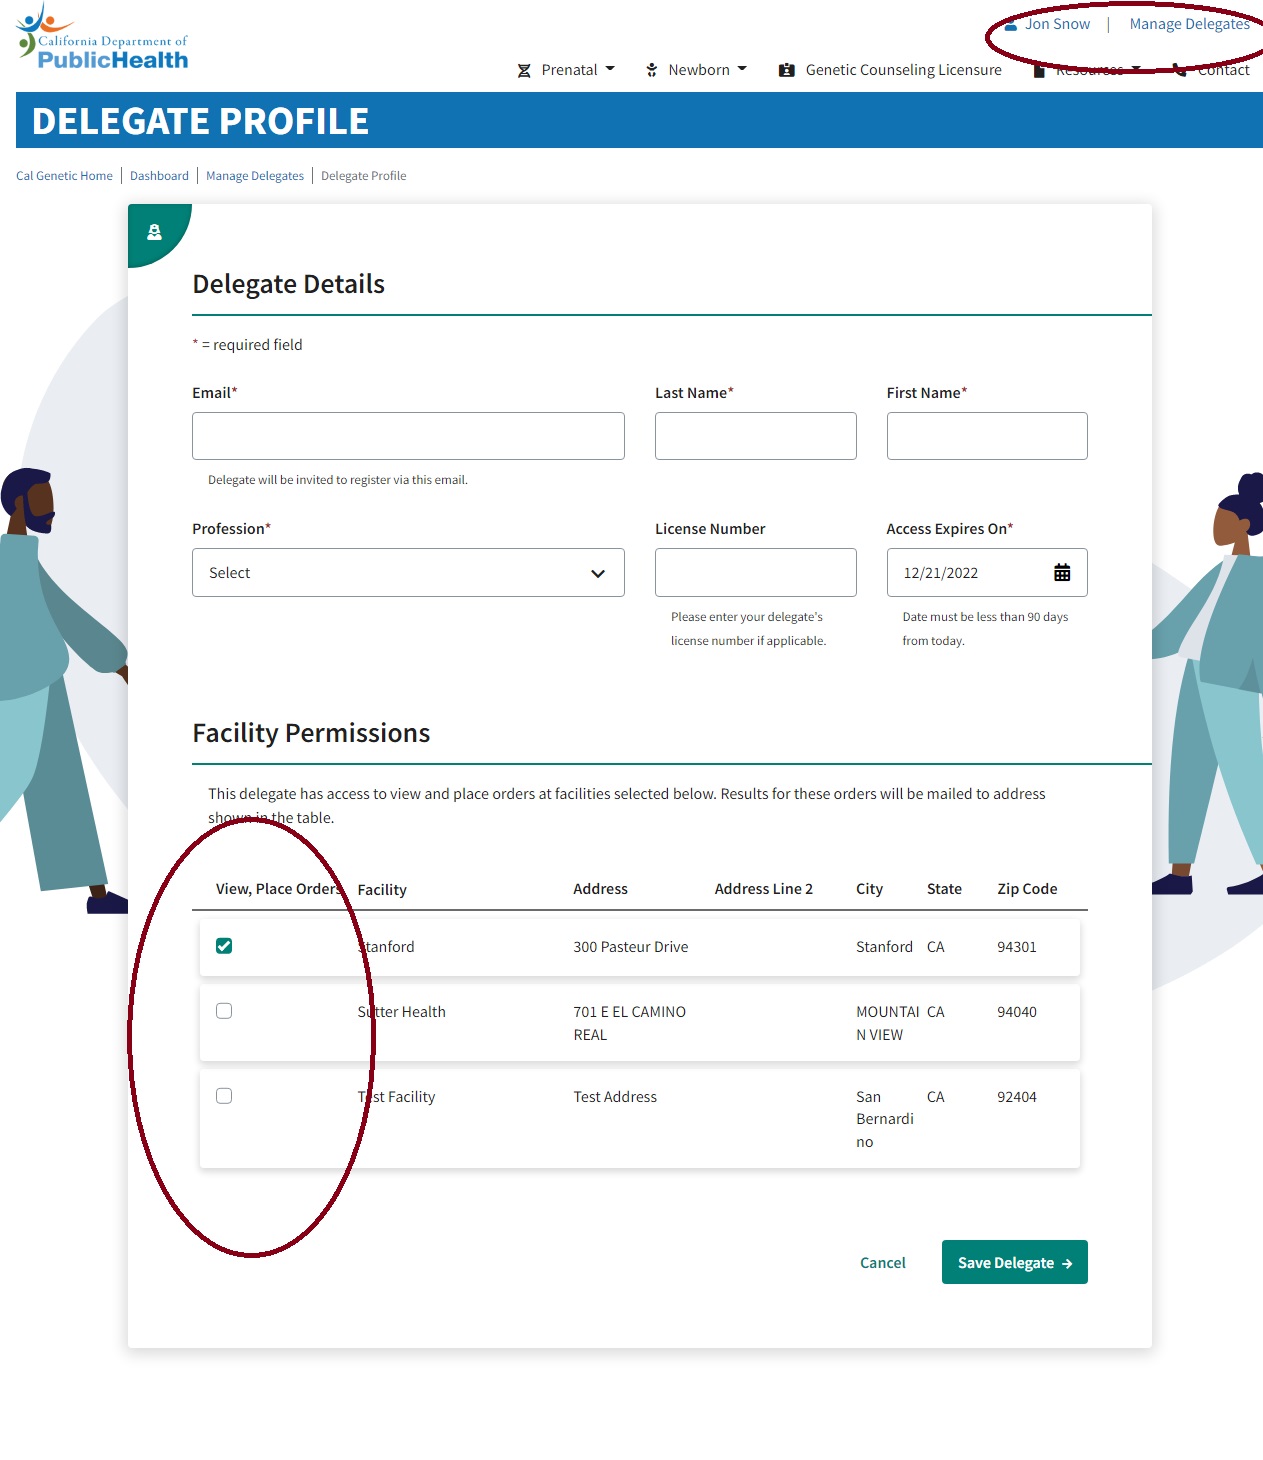 CalGenetic Portal screenshot showing how to change facility permissions